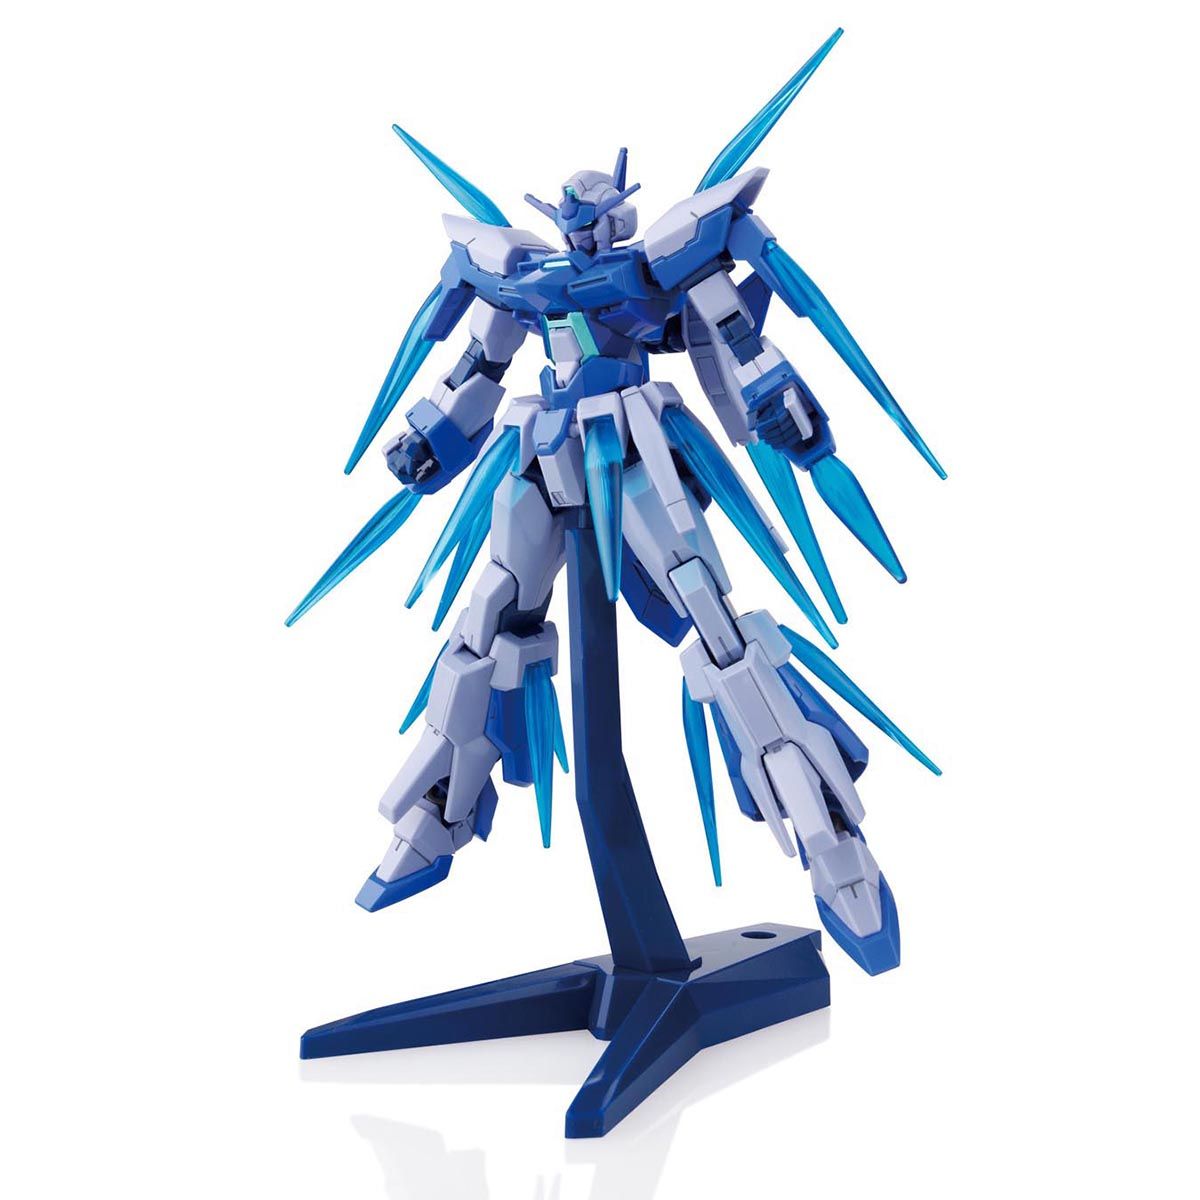 HG 1/144 AGE-FX ガンダムAGE-FX バースト [Gundam AGE-FX Burst Mode] 0180752 4543112807526